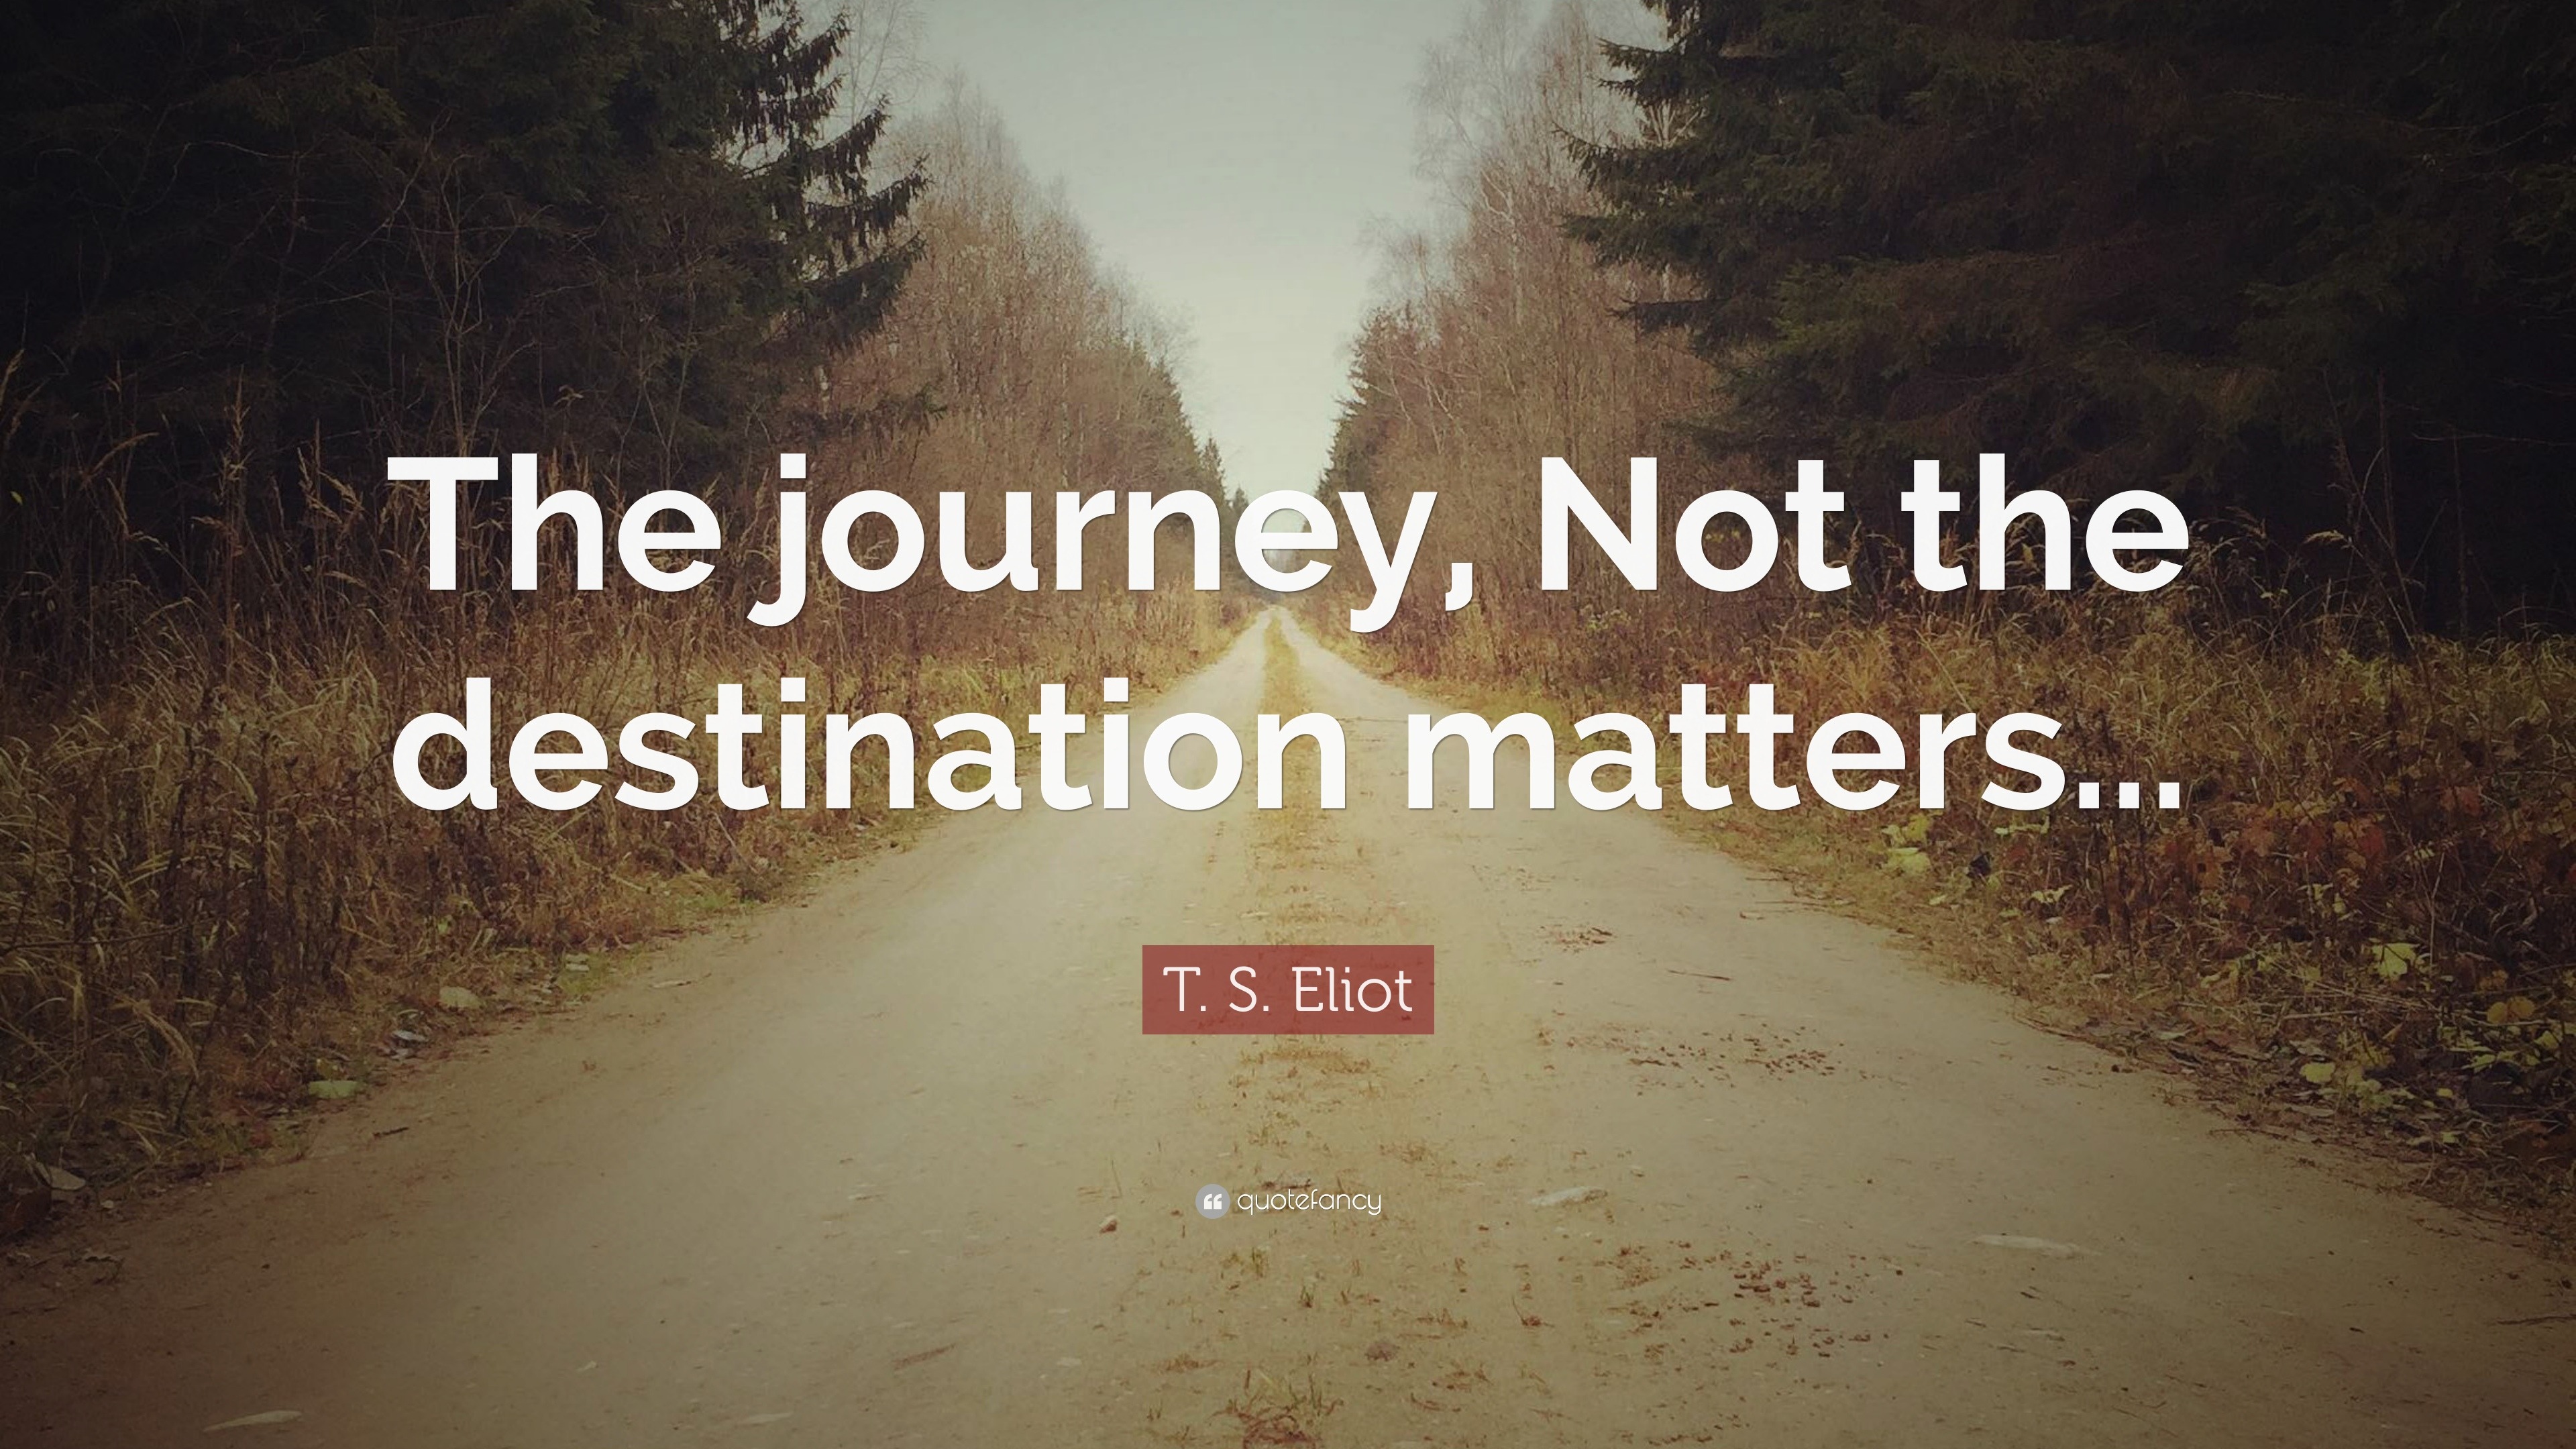 enjoy the journey not destination